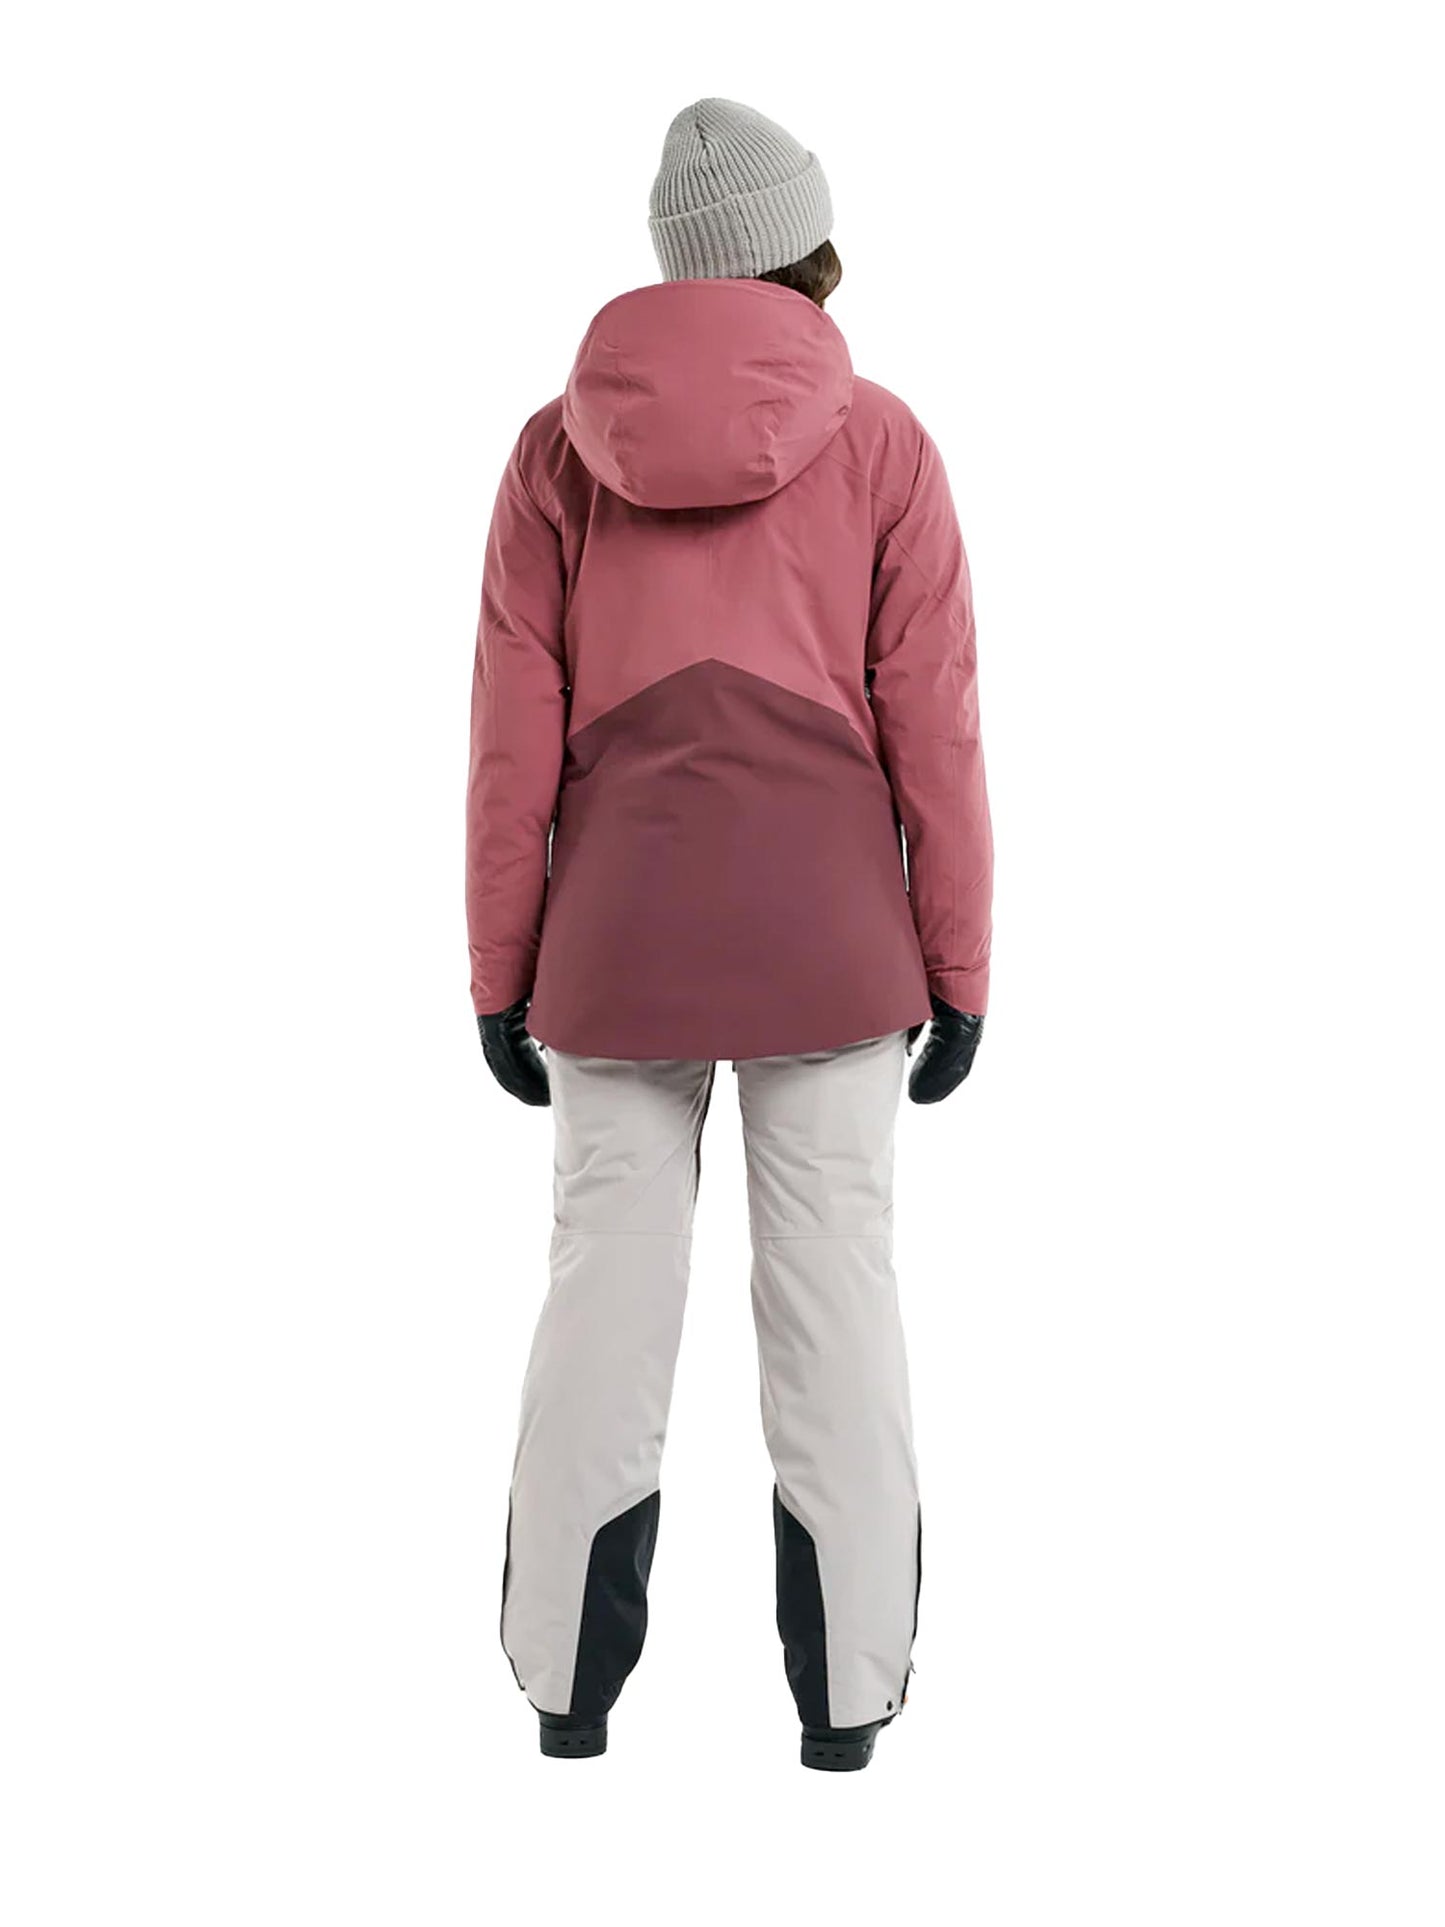 women's Orage Grace ski jacket, pink and cherry